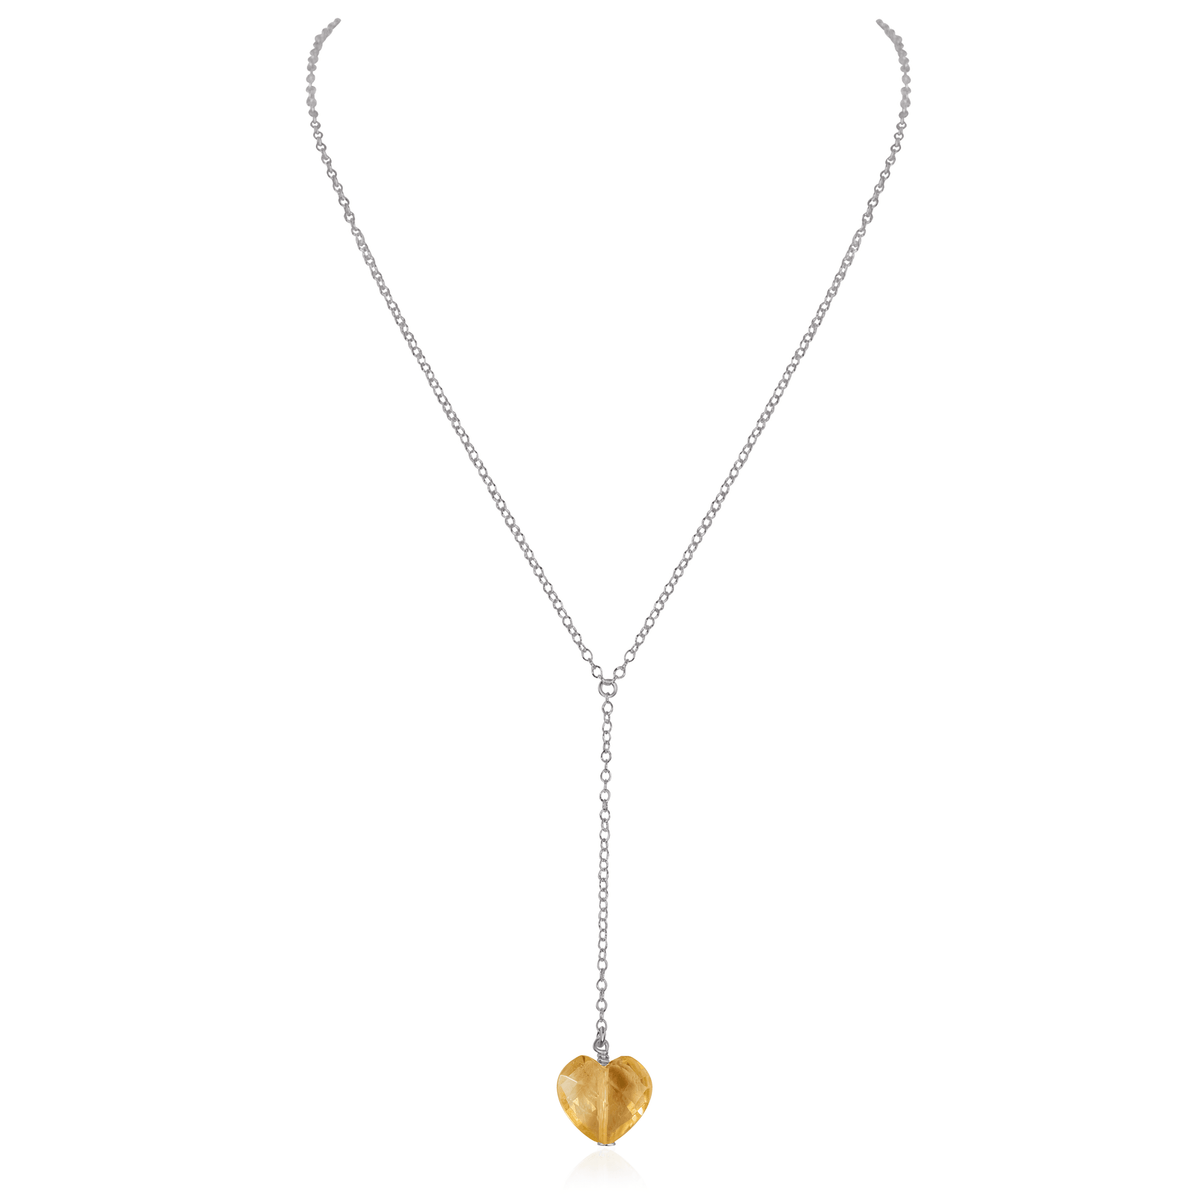 Citrine Crystal Heart Lariat Necklace - Citrine Crystal Heart Lariat Necklace - Stainless Steel - Luna Tide Handmade Crystal Jewellery